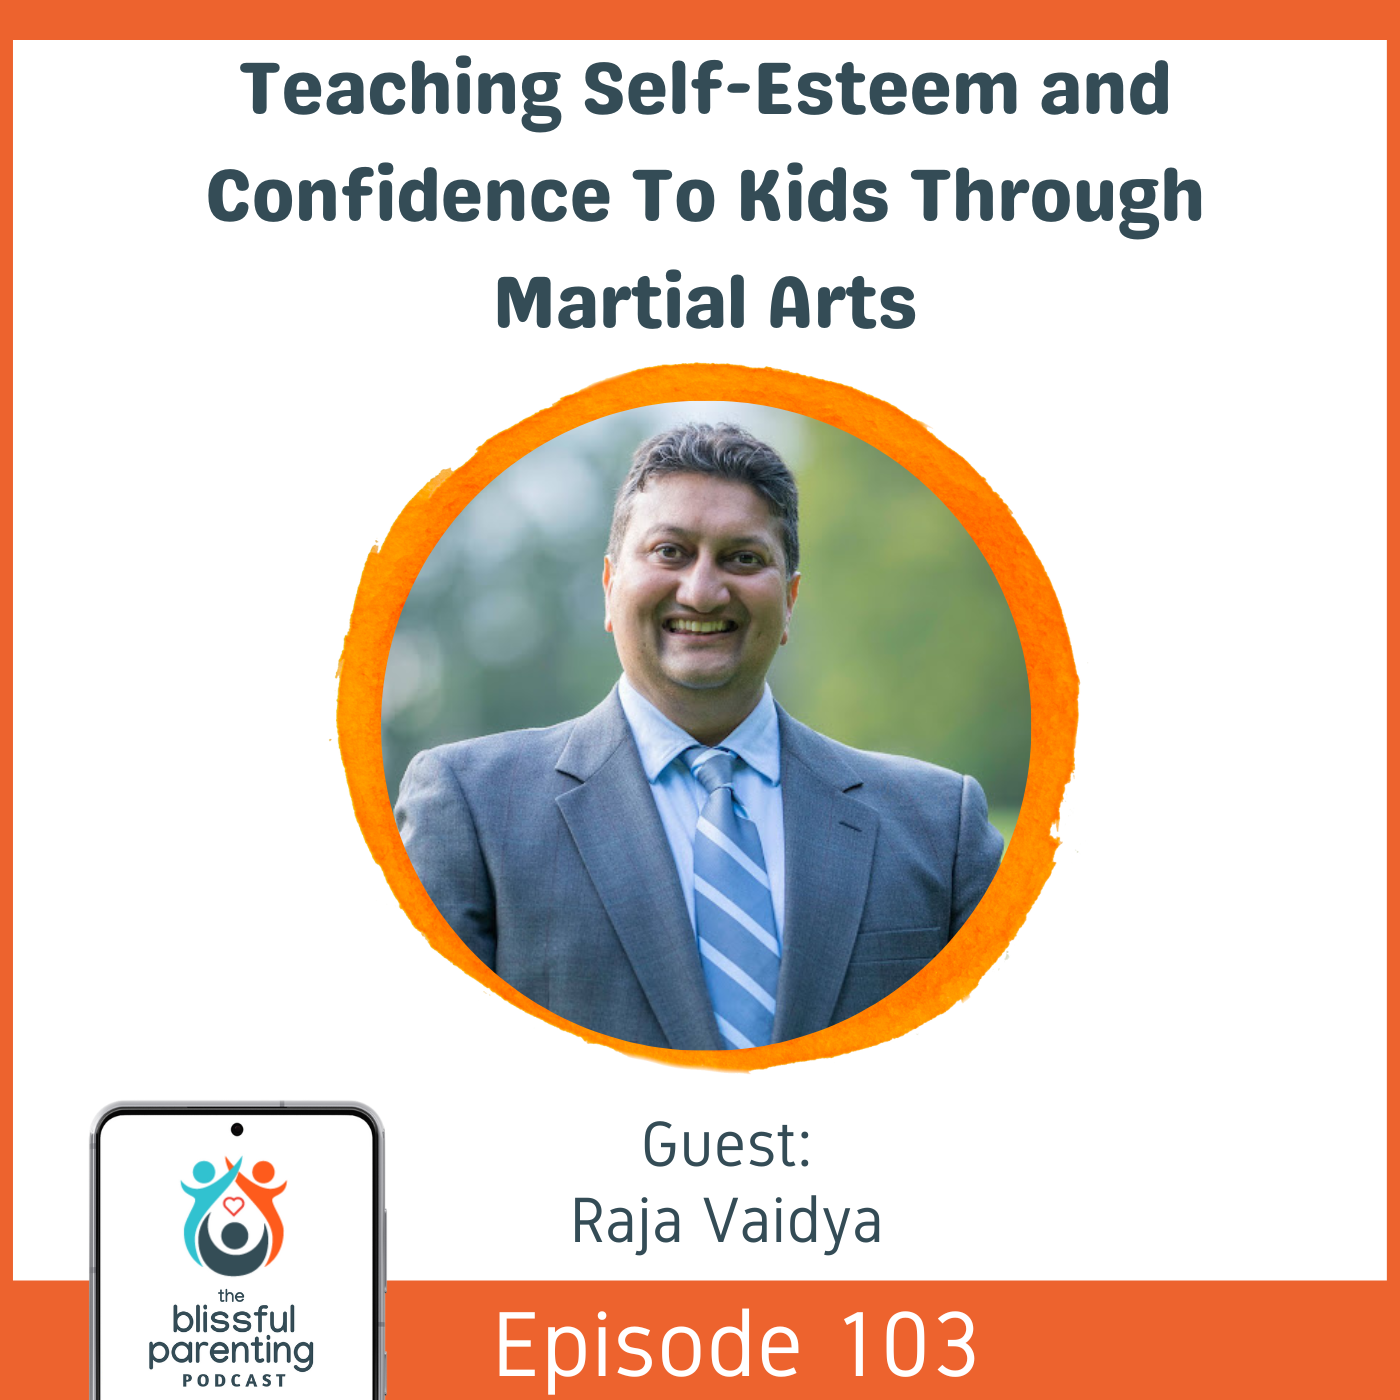 Teaching Self-Esteem and Confidence To Kids Through Martial Arts with Raja Vaidya